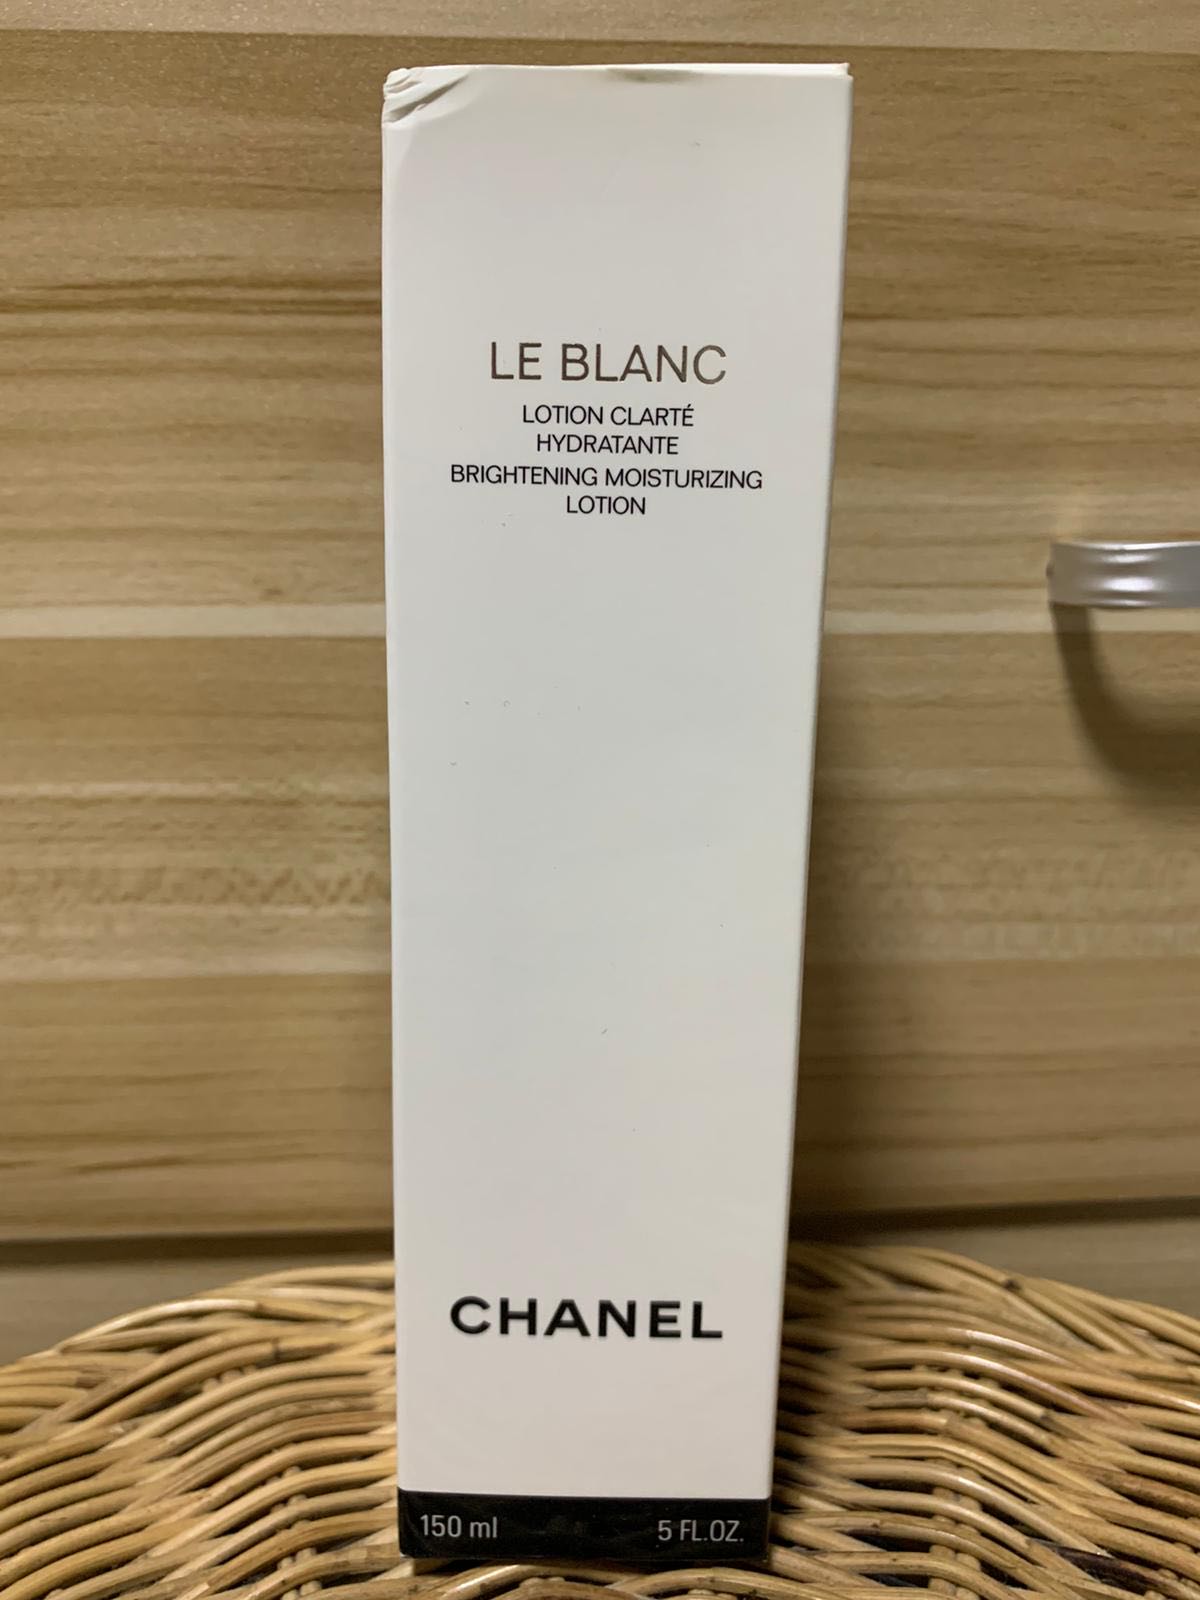 Chanel Le Blanc brightening moisturizing lotion 150ML